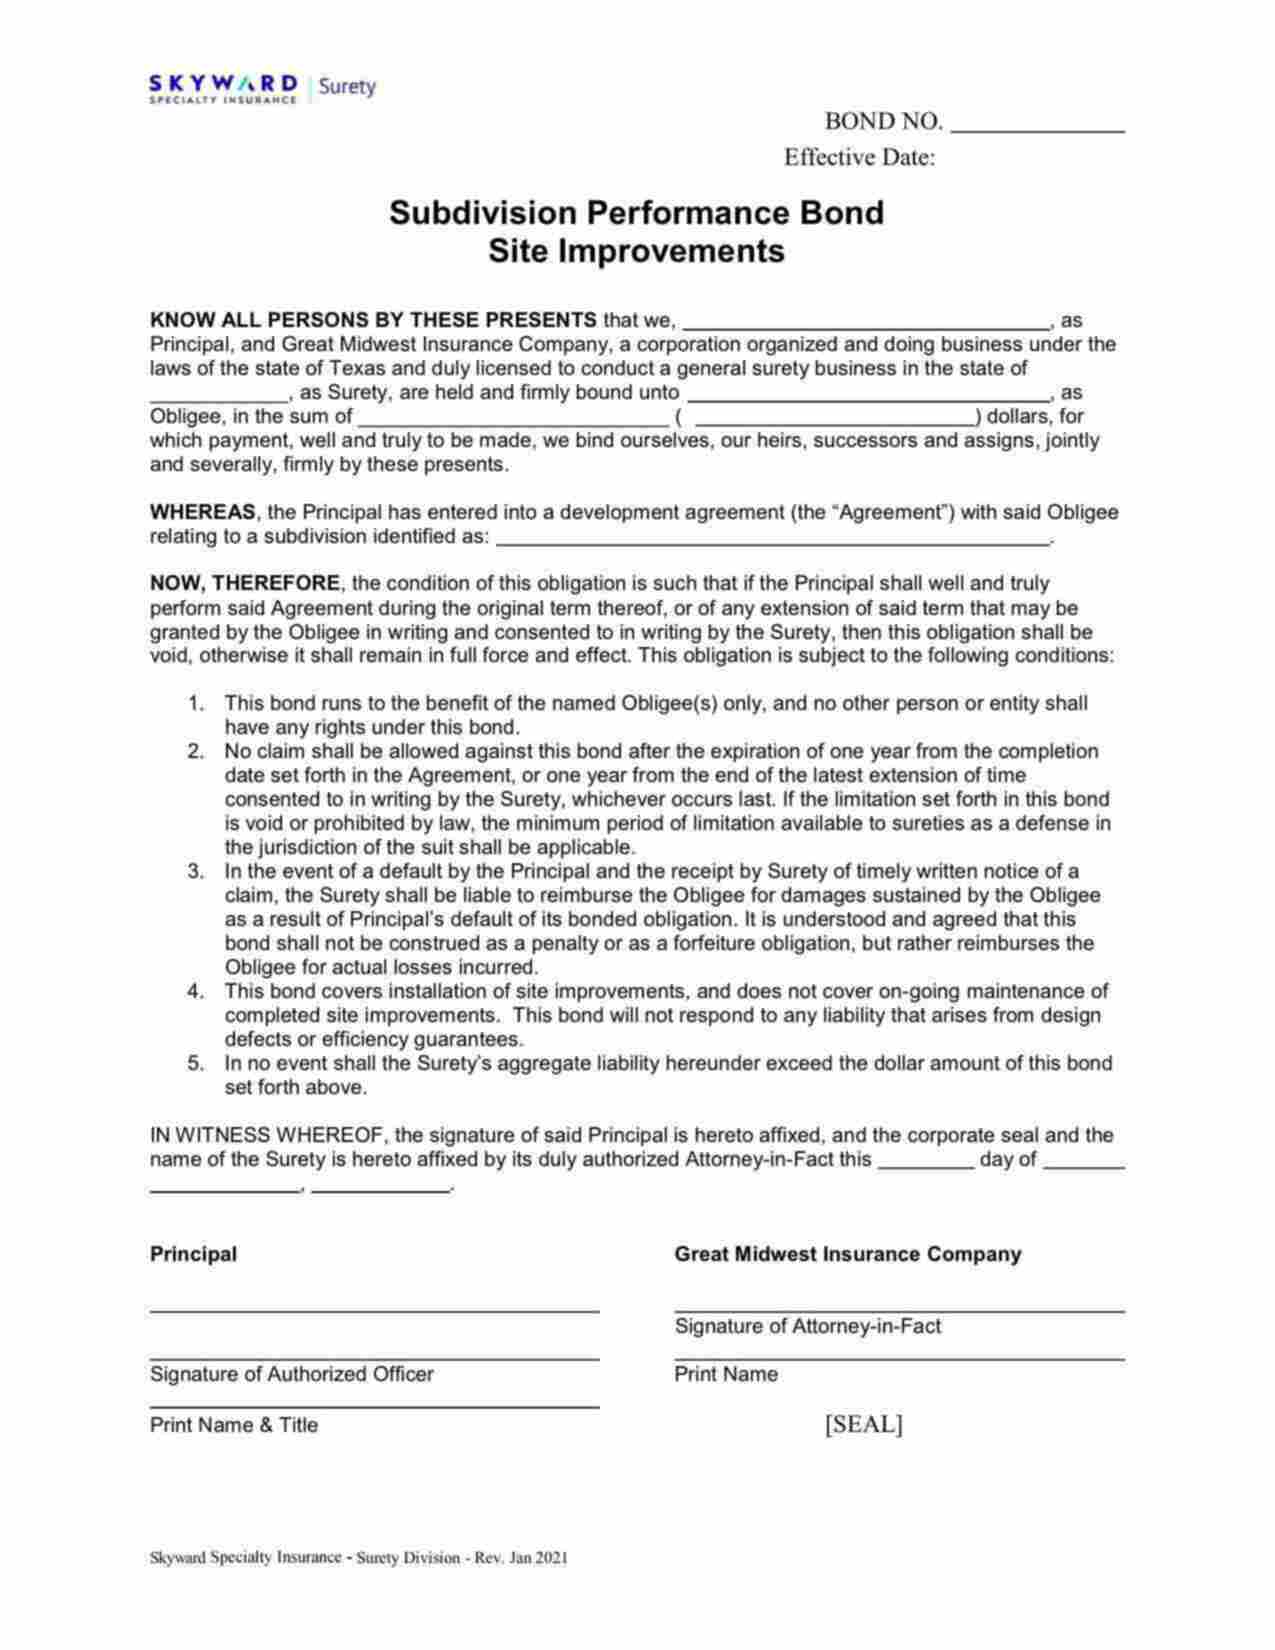 Illinois Subdivision, Site Improvement or Development Bond Form